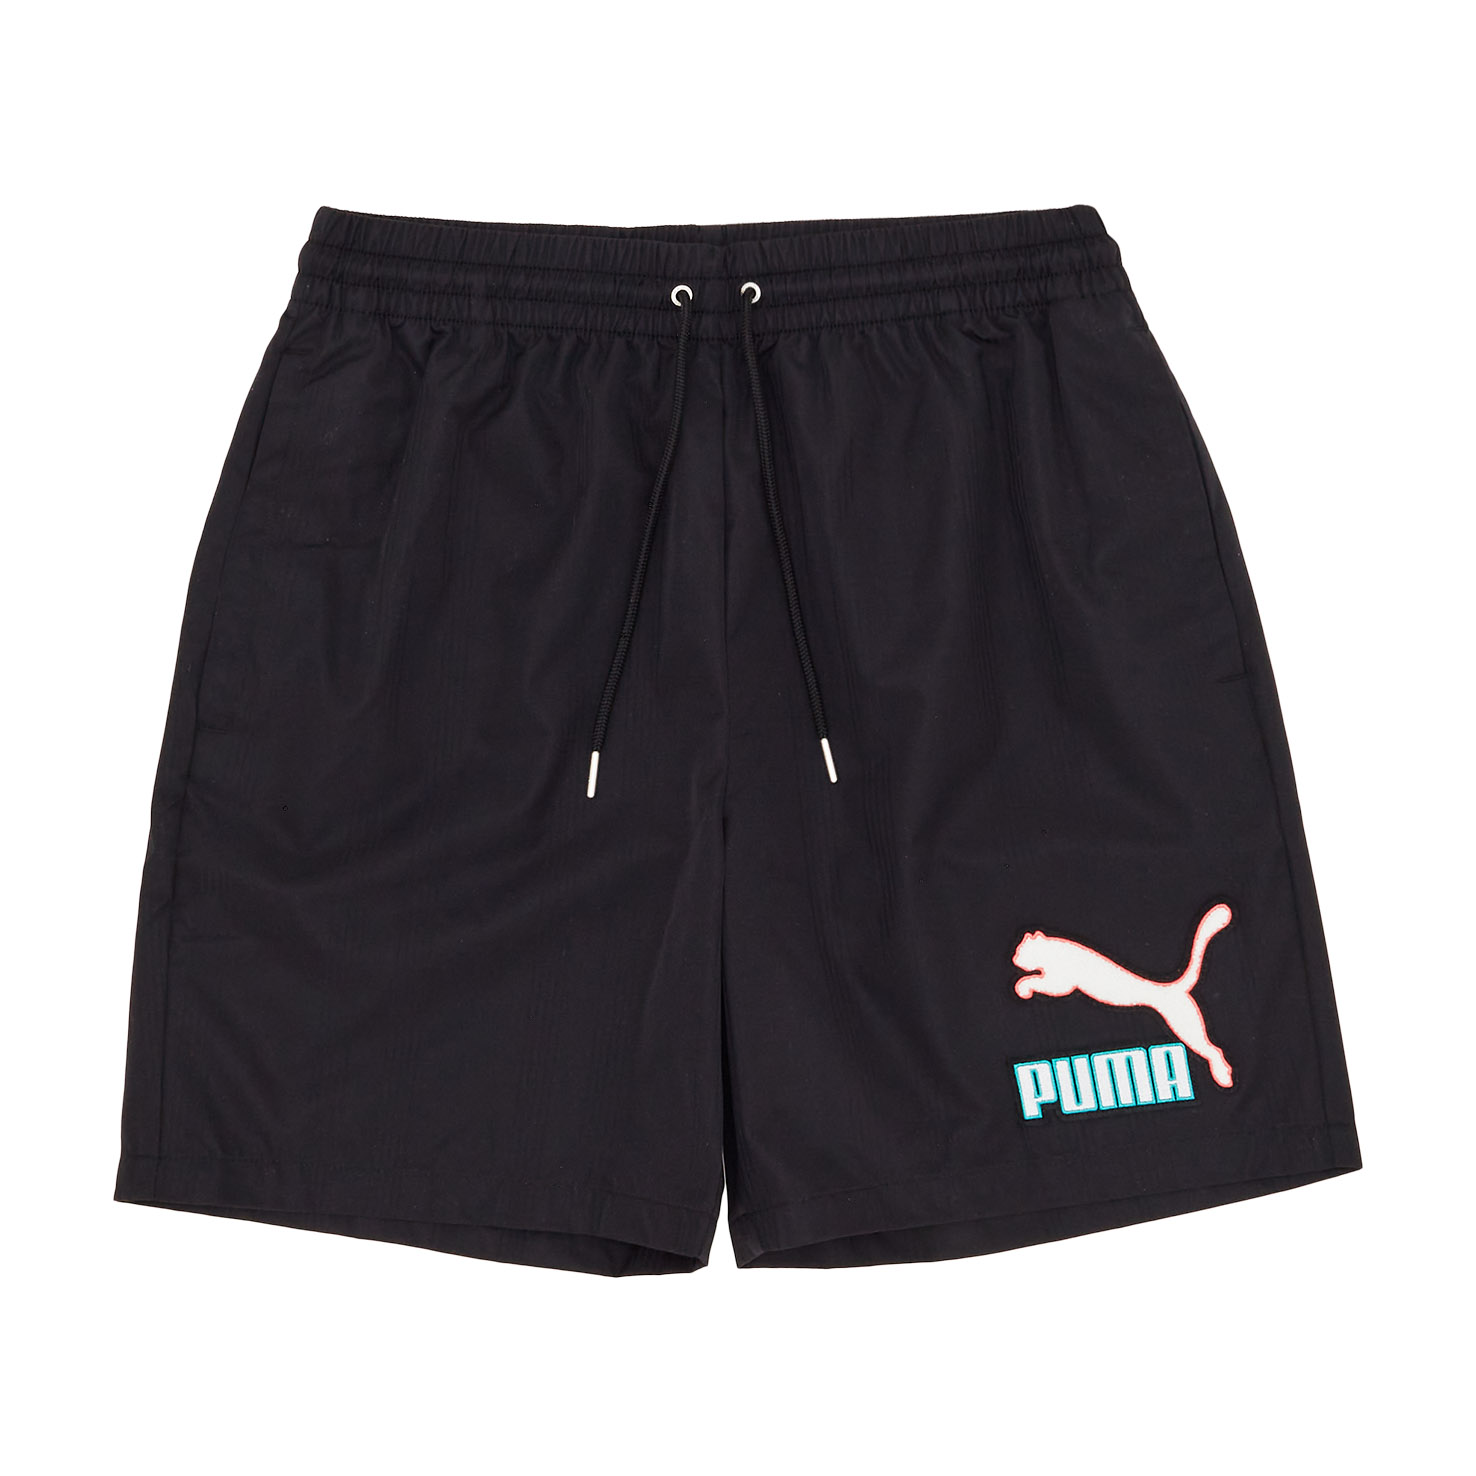 Fandom Shorts 7 Puma